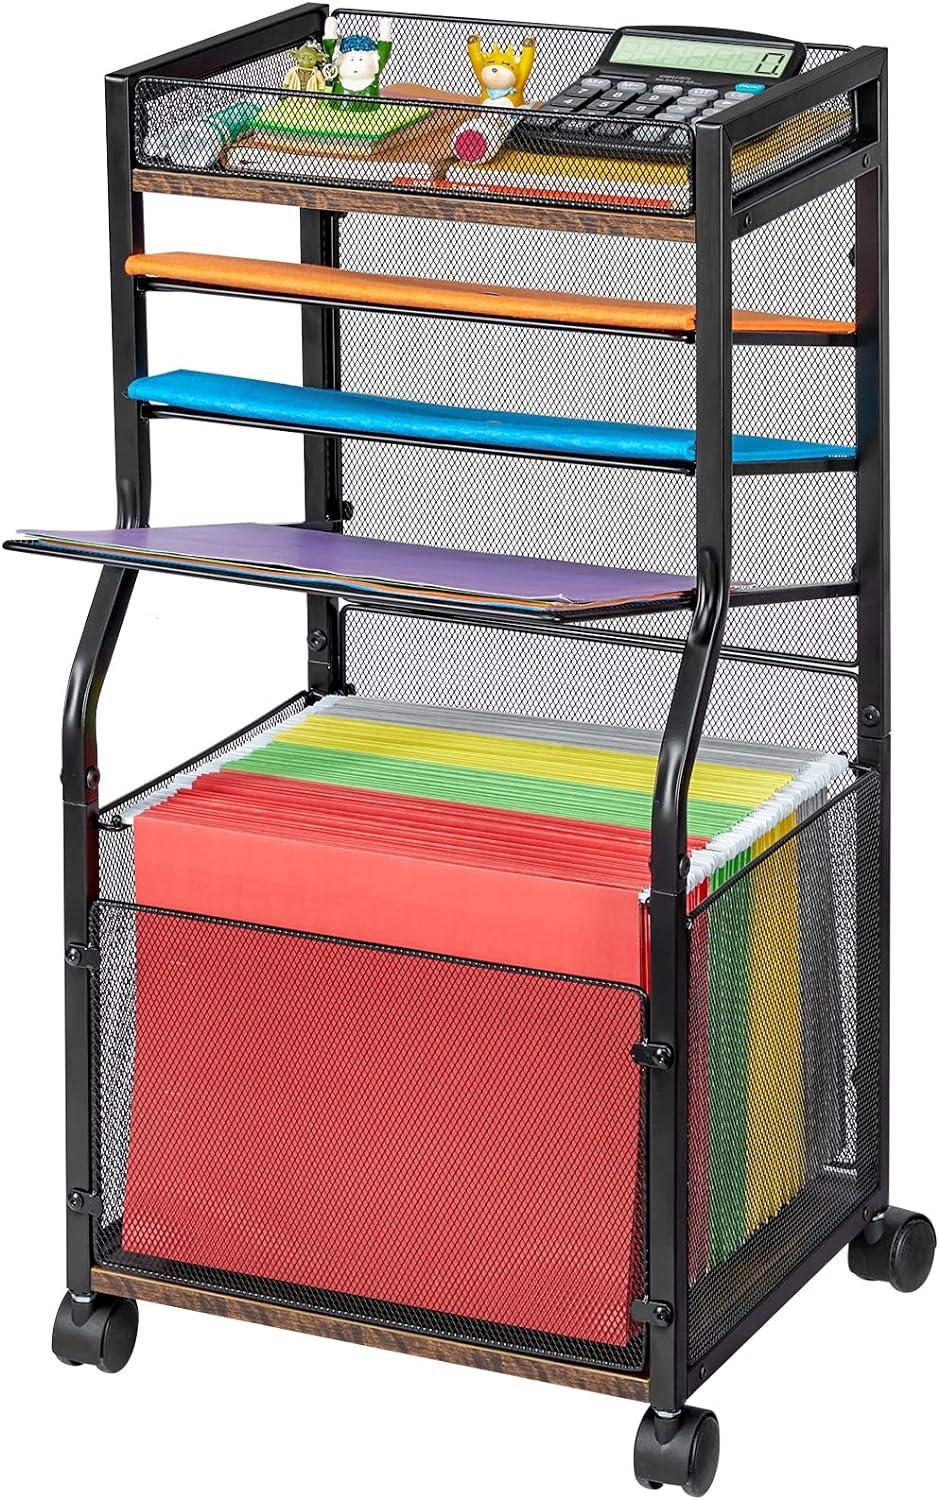 5-tier rolling file cart with hanging file folders mobile desk file organizer on lockable wheels 